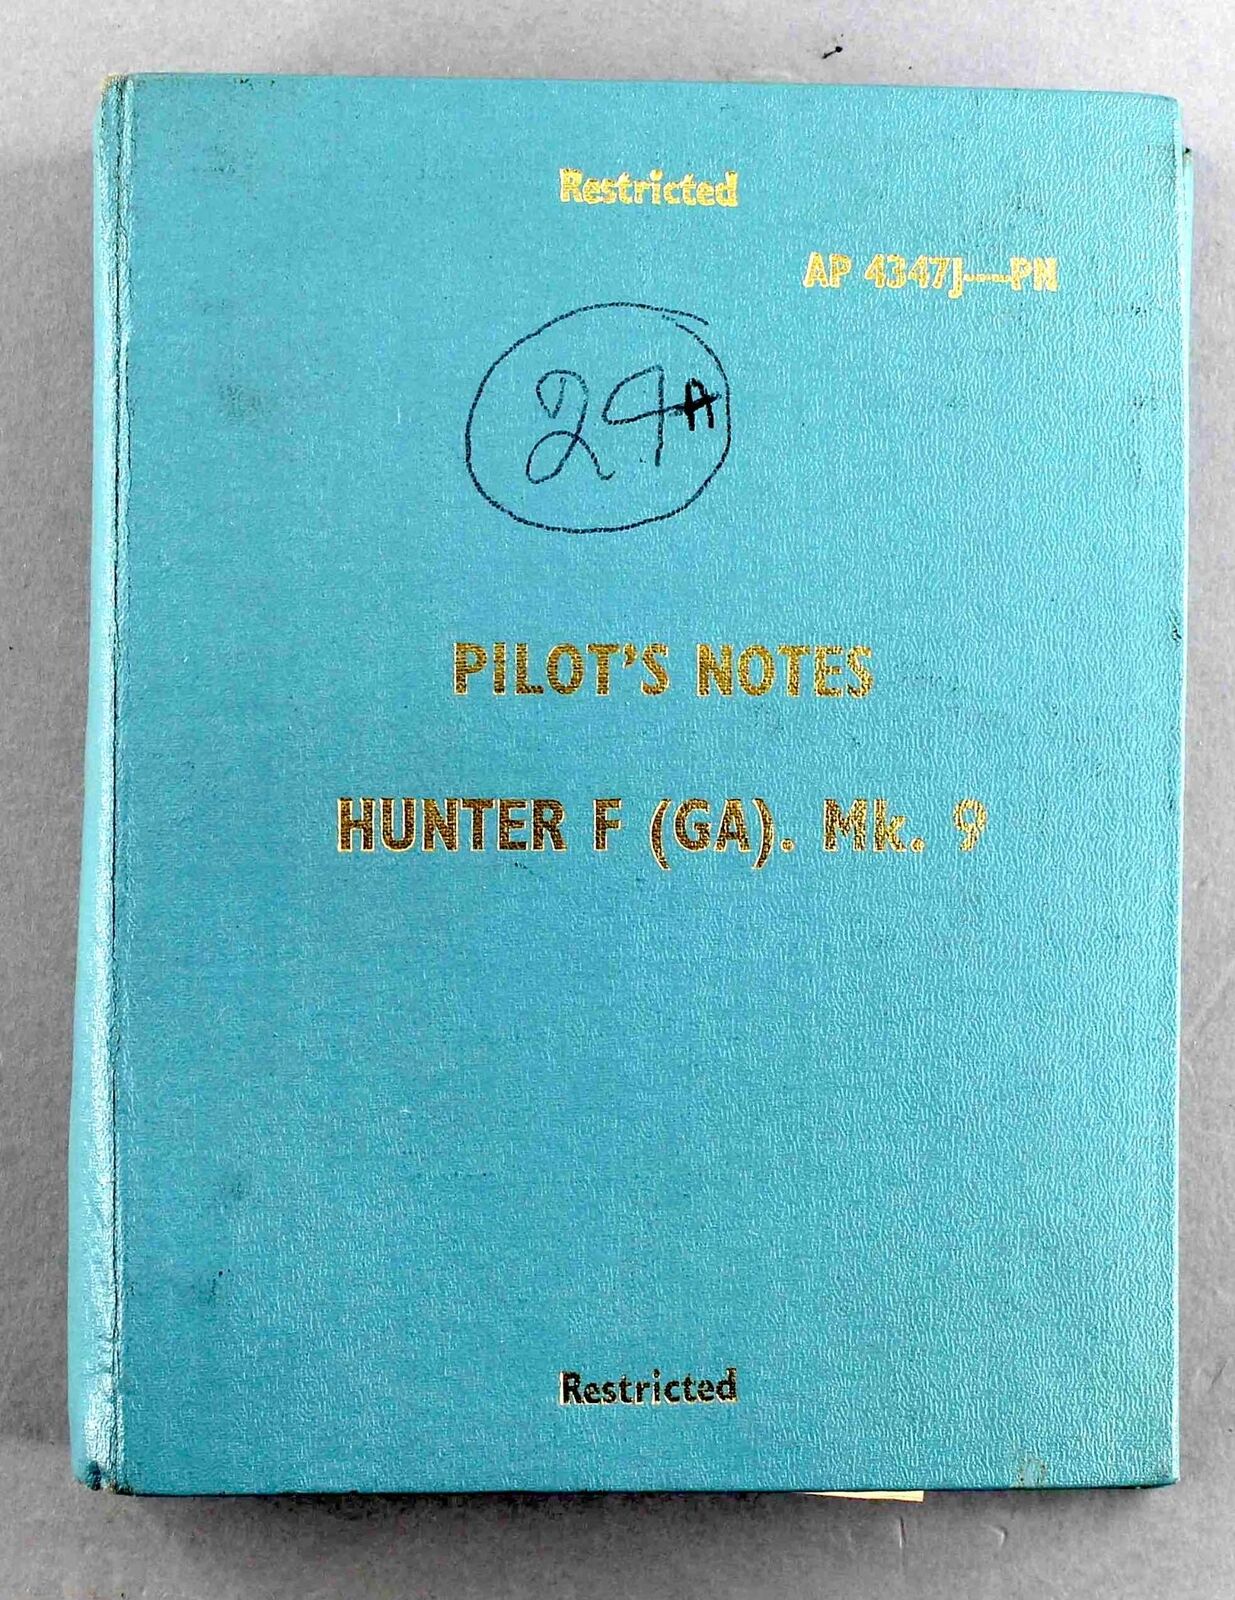 HAWKER HUNTER F (GA). MK. 9 ORIGINAL PILOTS NOTES RAF ROYAL AIR FORCE MANUAL